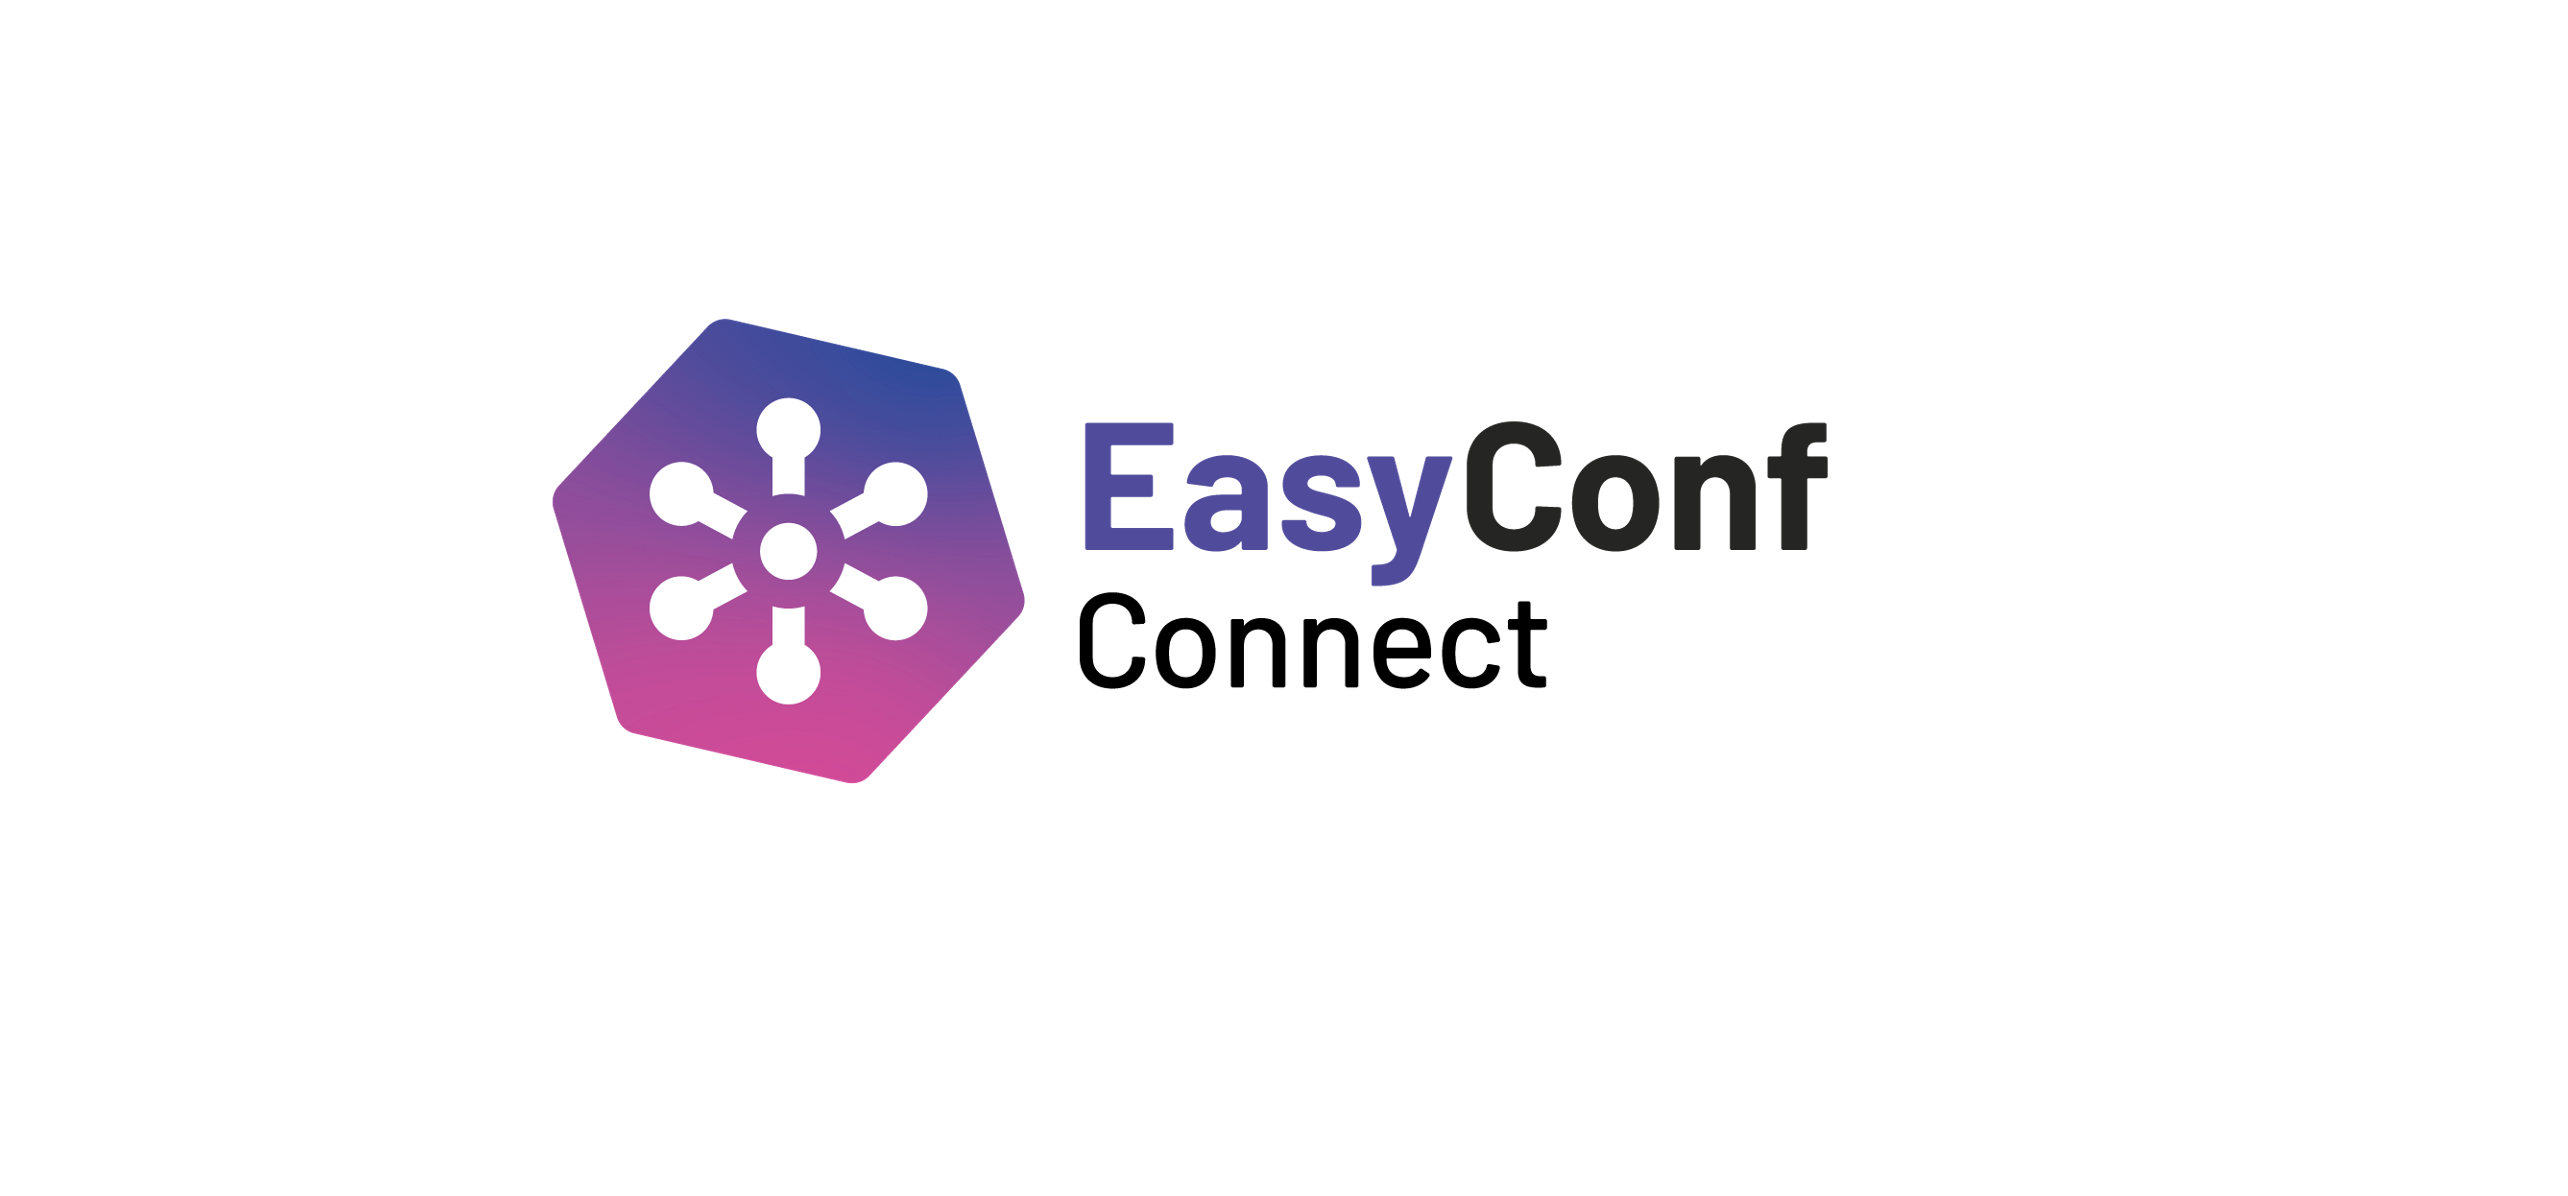 EasyConf Connect